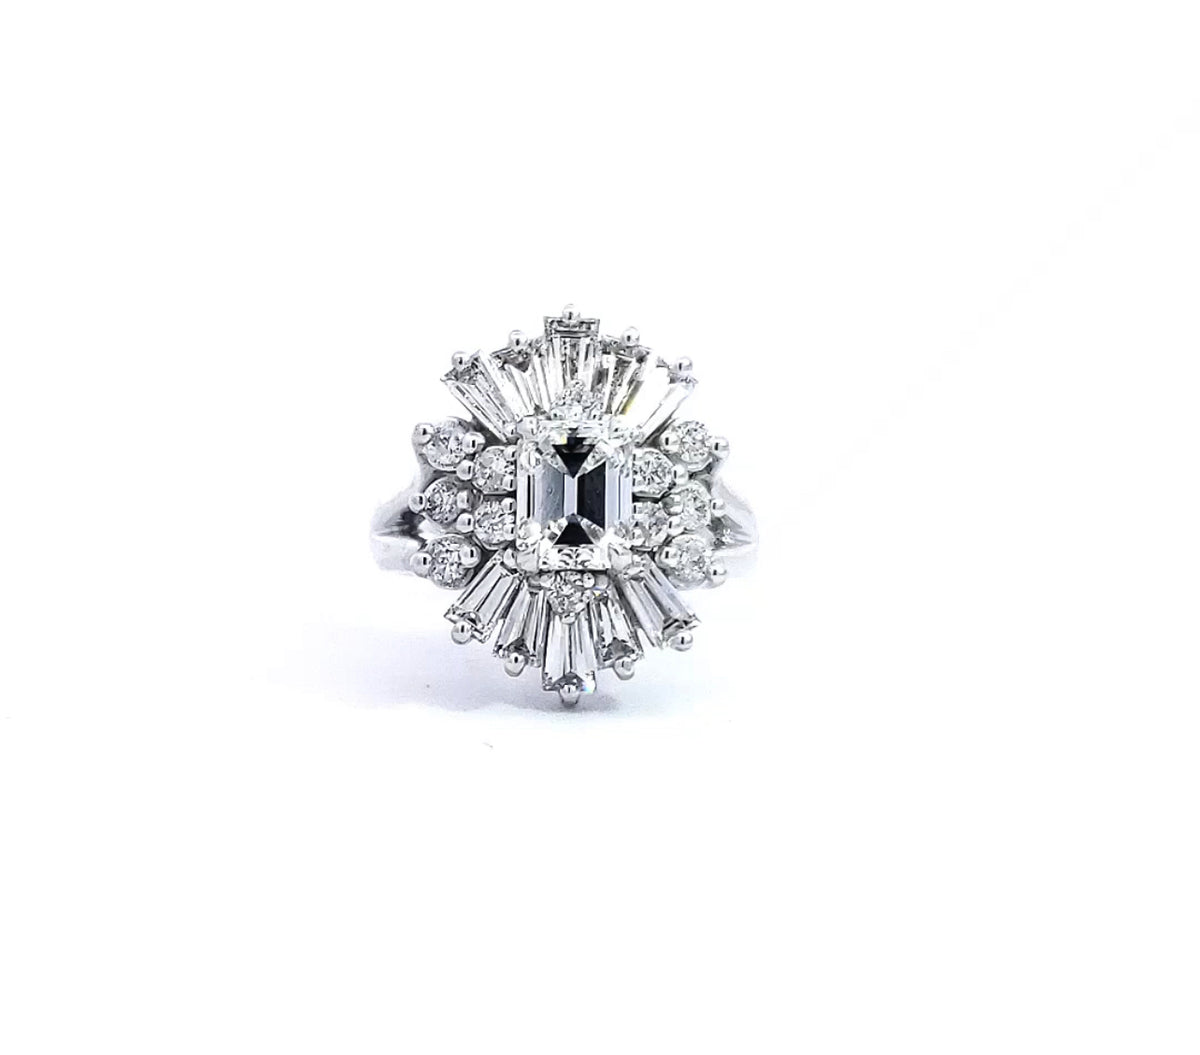 14K White Gold 2.66cttw Diamond Halo Engagement Ring, Size 6.5